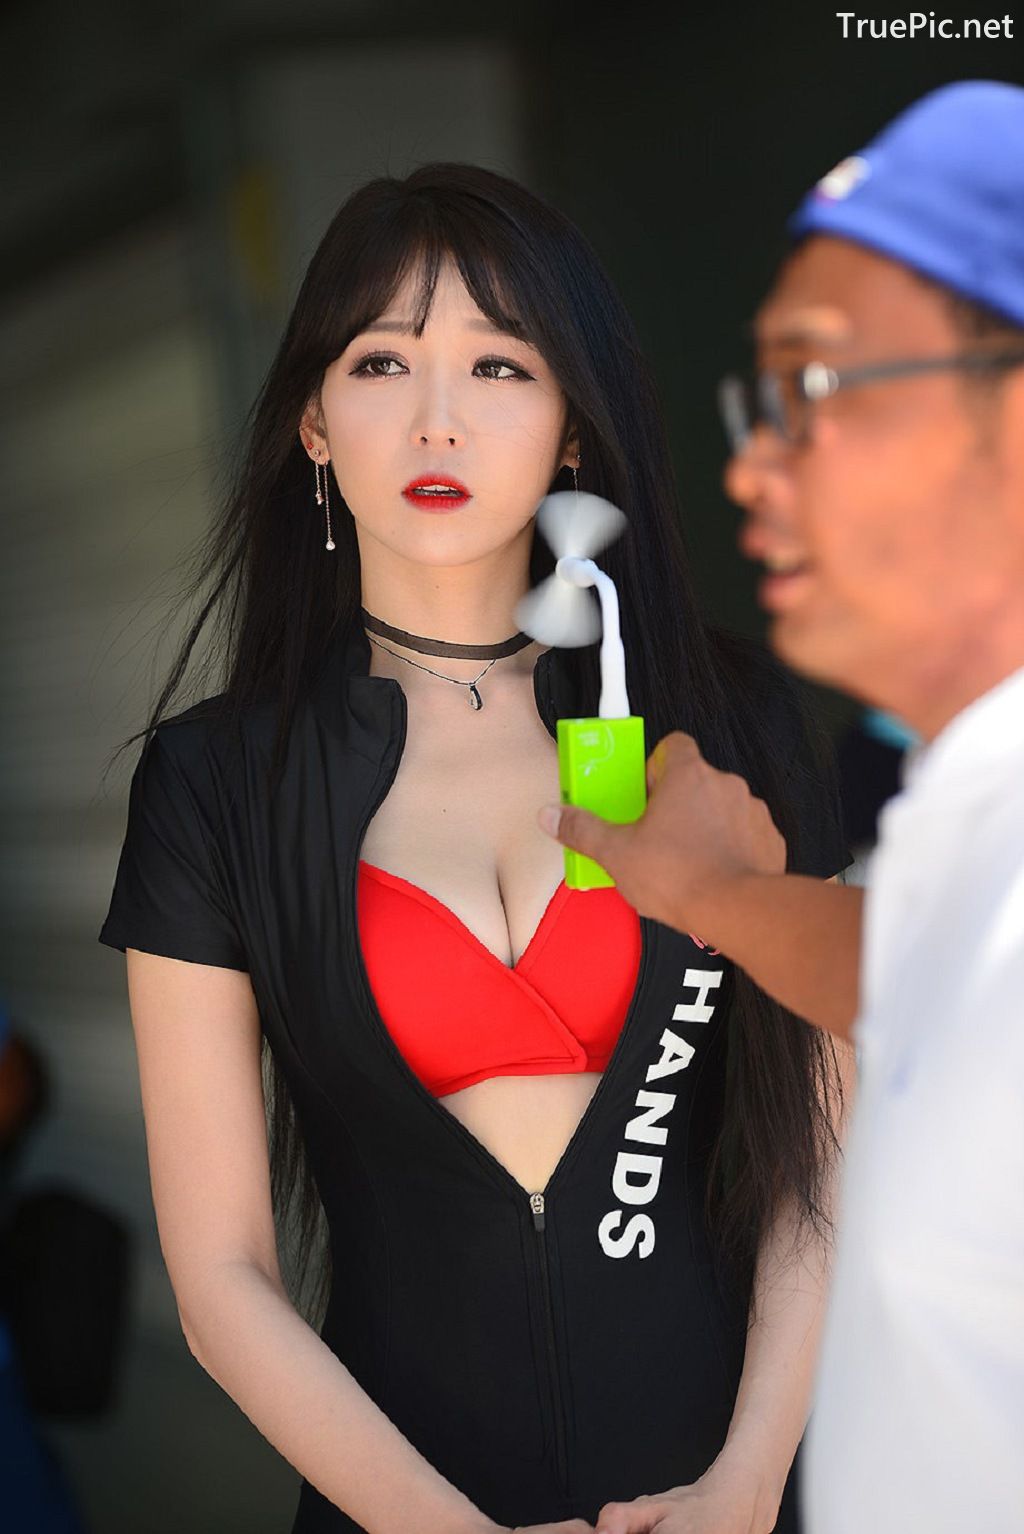 Image-Korean-Racing-Model-Lee-Eun-Hye-At-Incheon-Korea-Tuning-Festival-TruePic.net- Picture-42